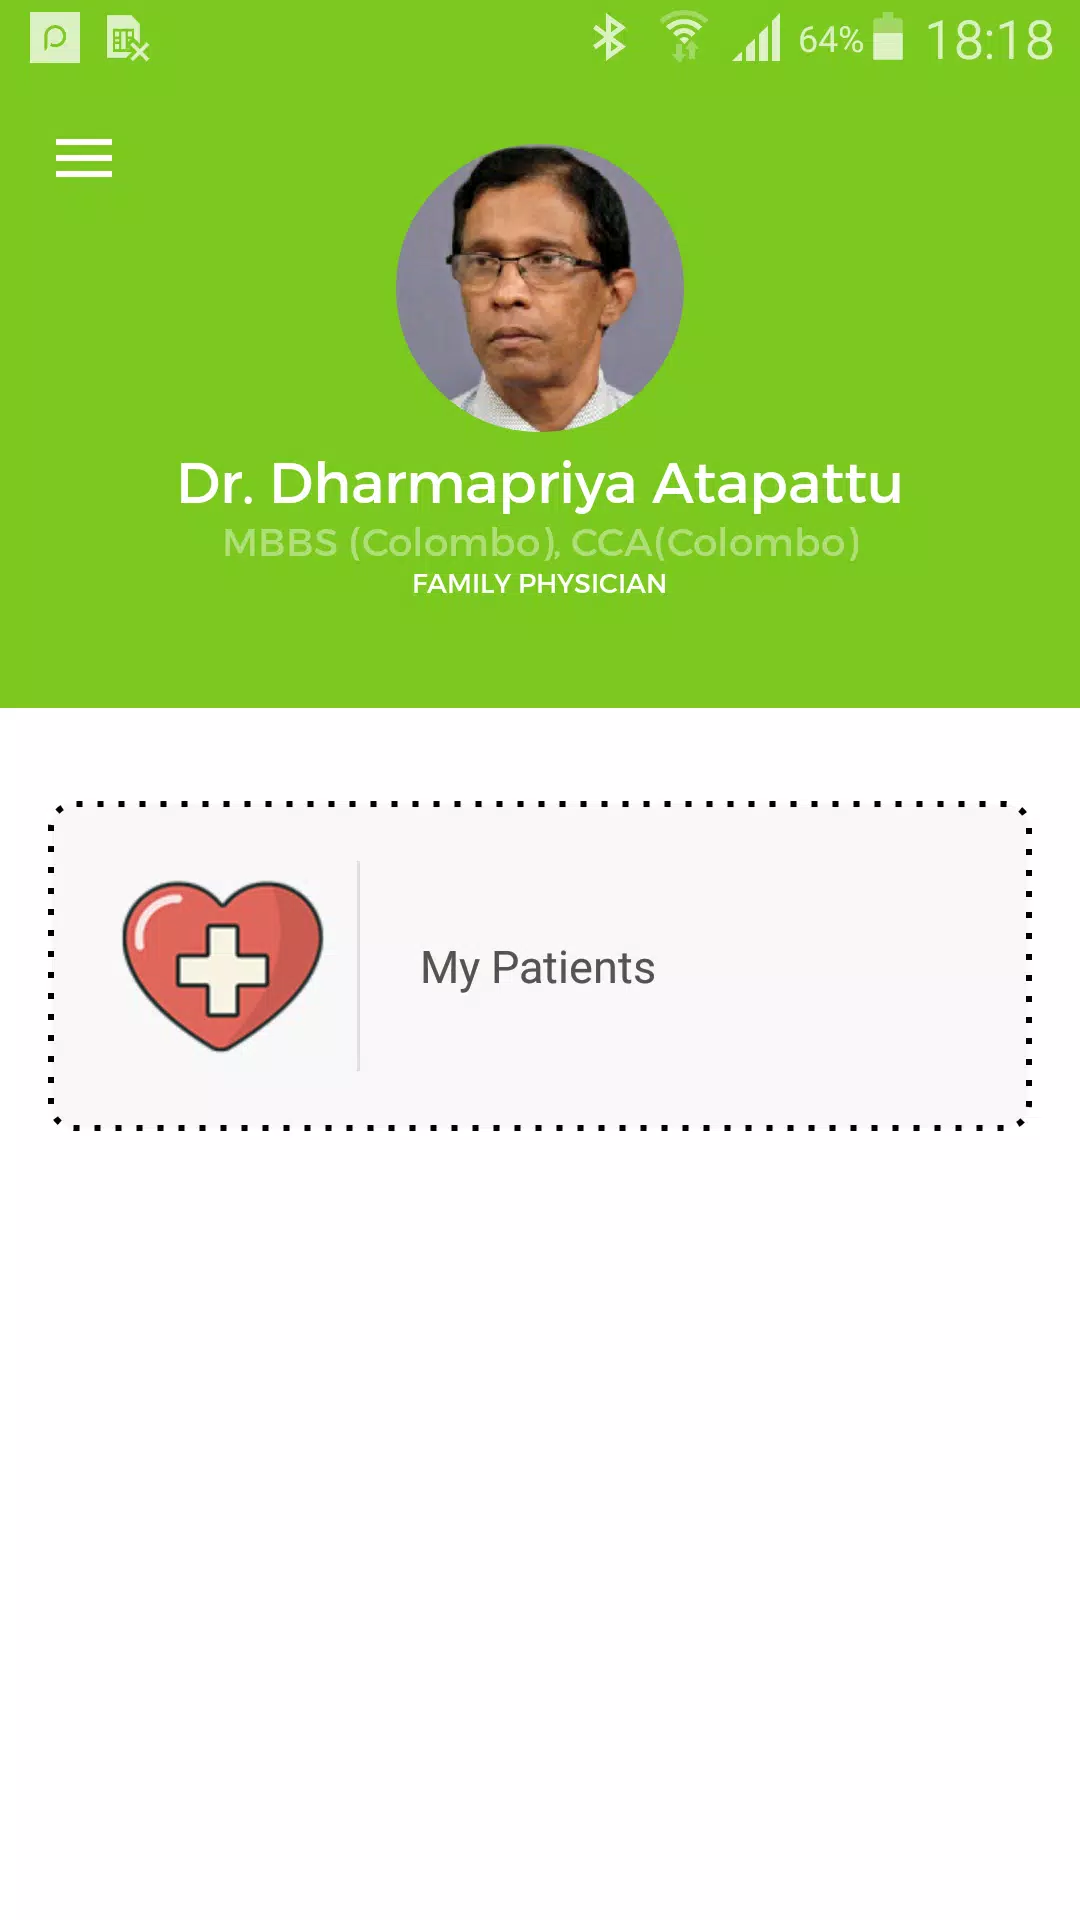 dr.consulta consultas e exames Apk Download for Android- Latest version  5.3.7- dr.consulta